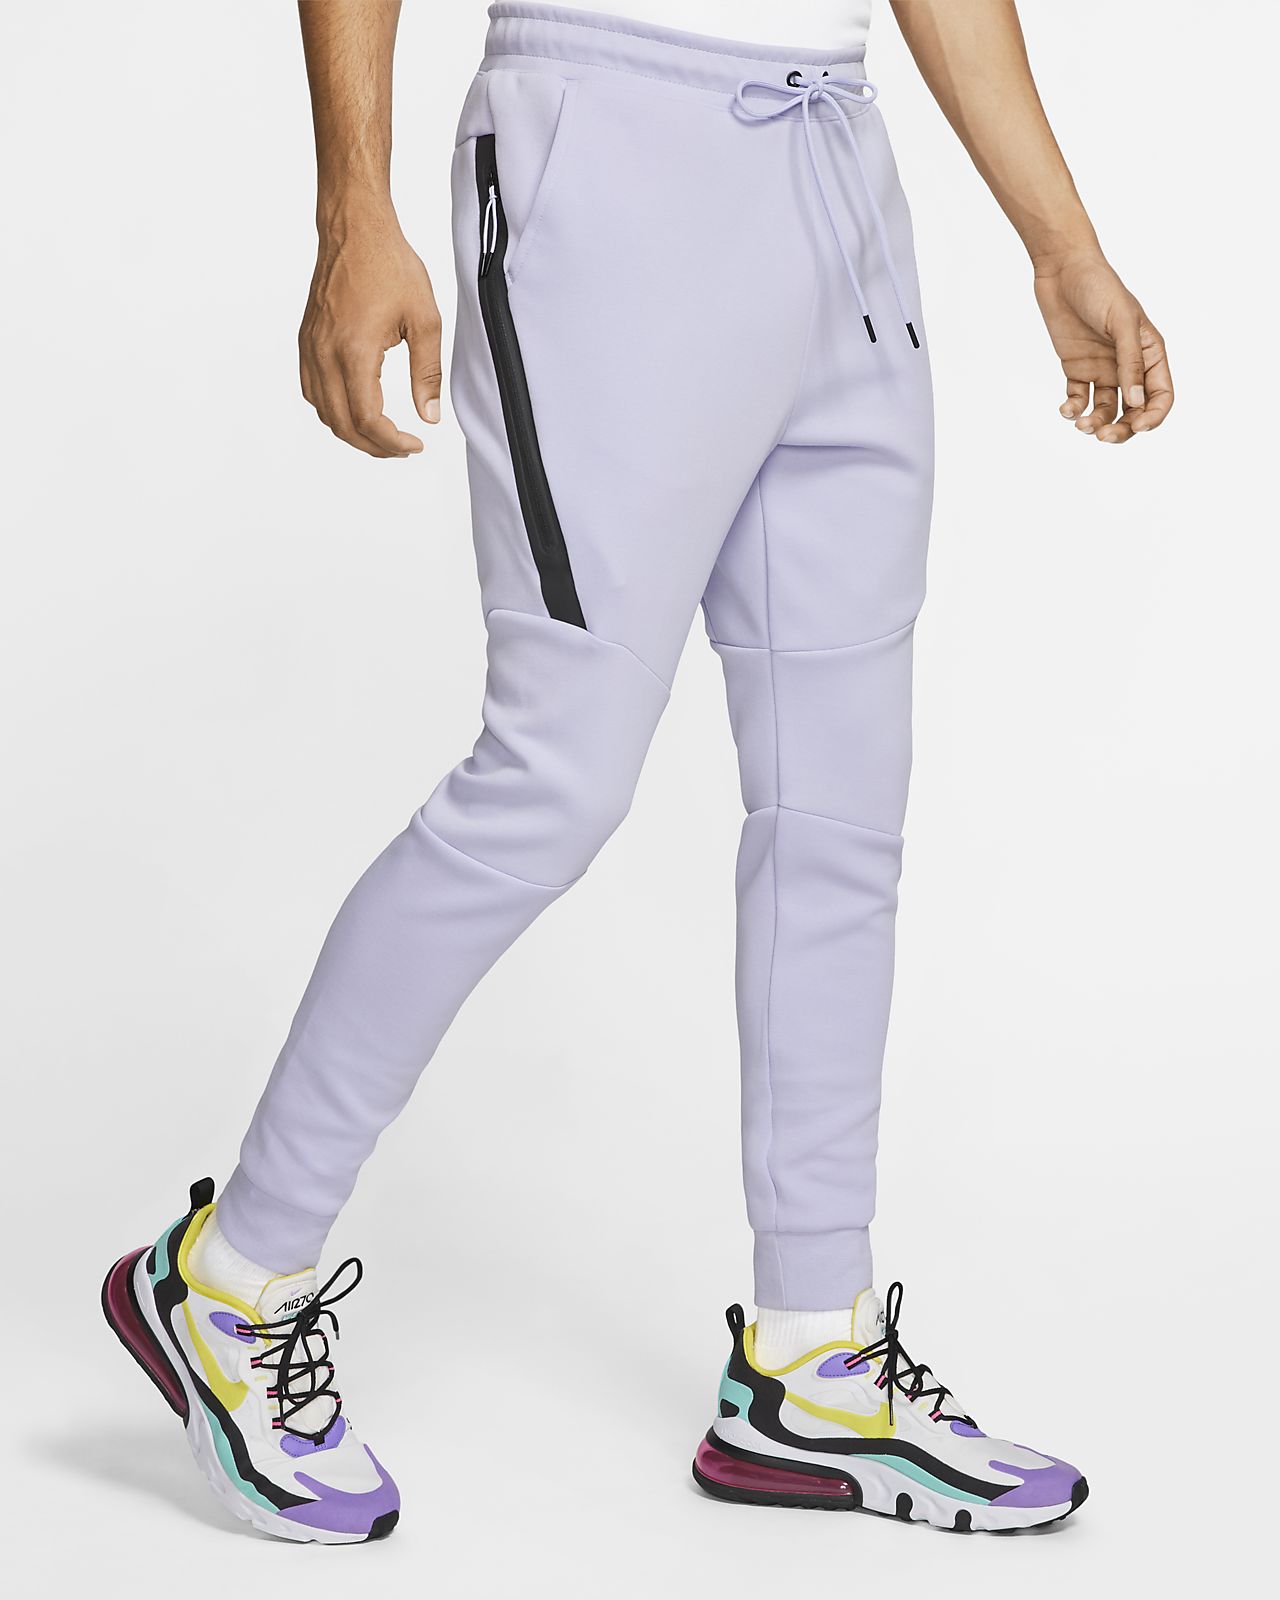 Mens Nike Sweatpants Size Chart